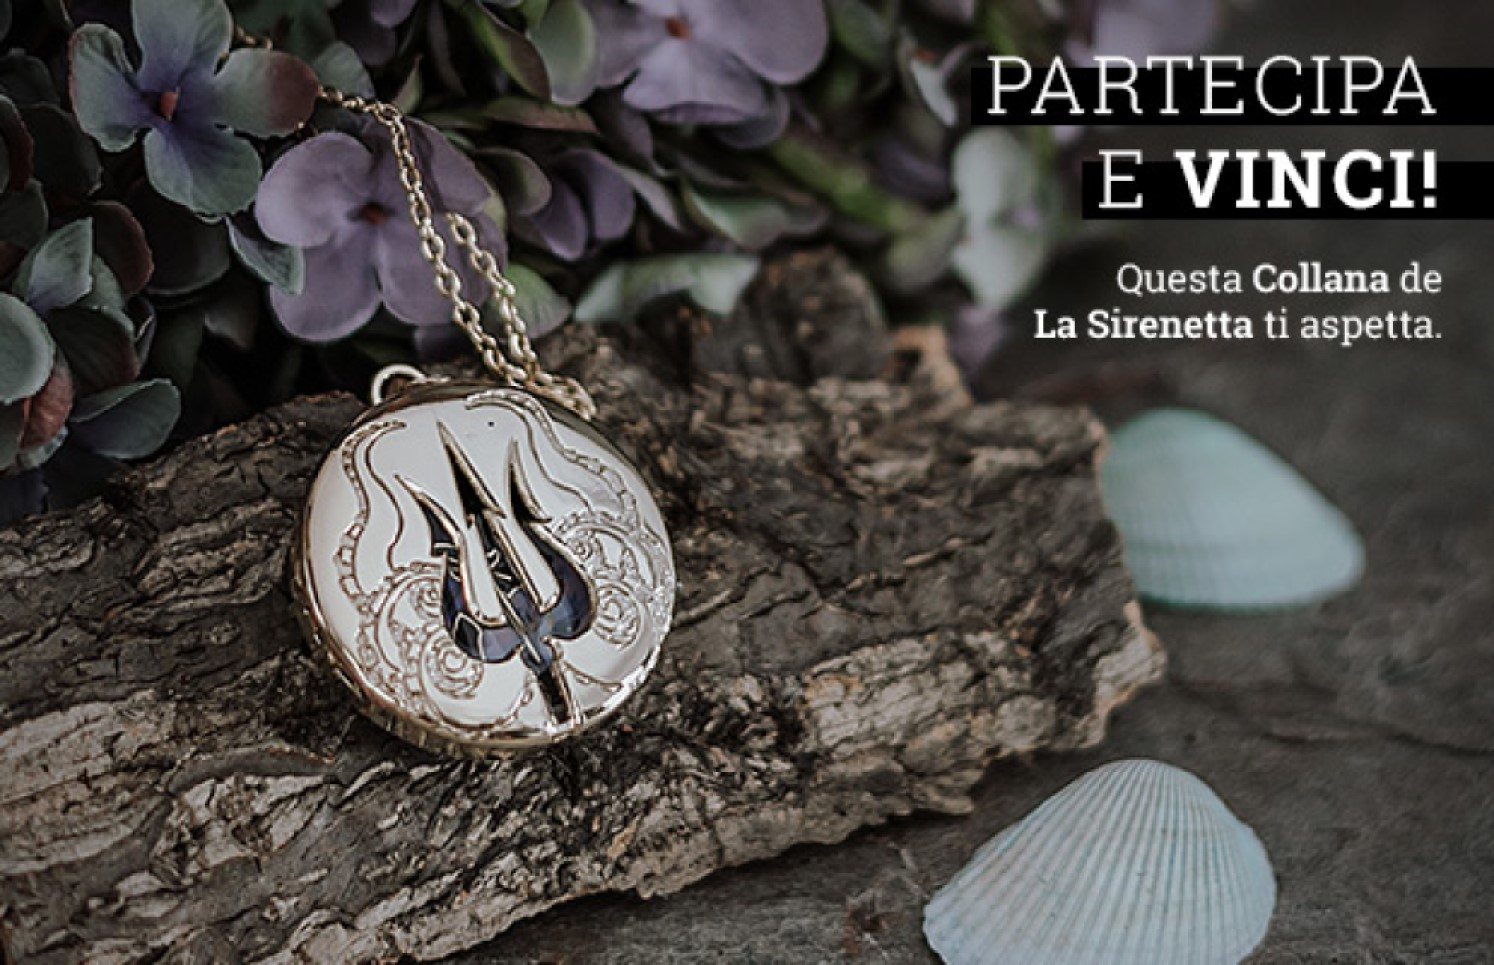 Vinci gratis una Collana de La Sirenetta con EMP Italia